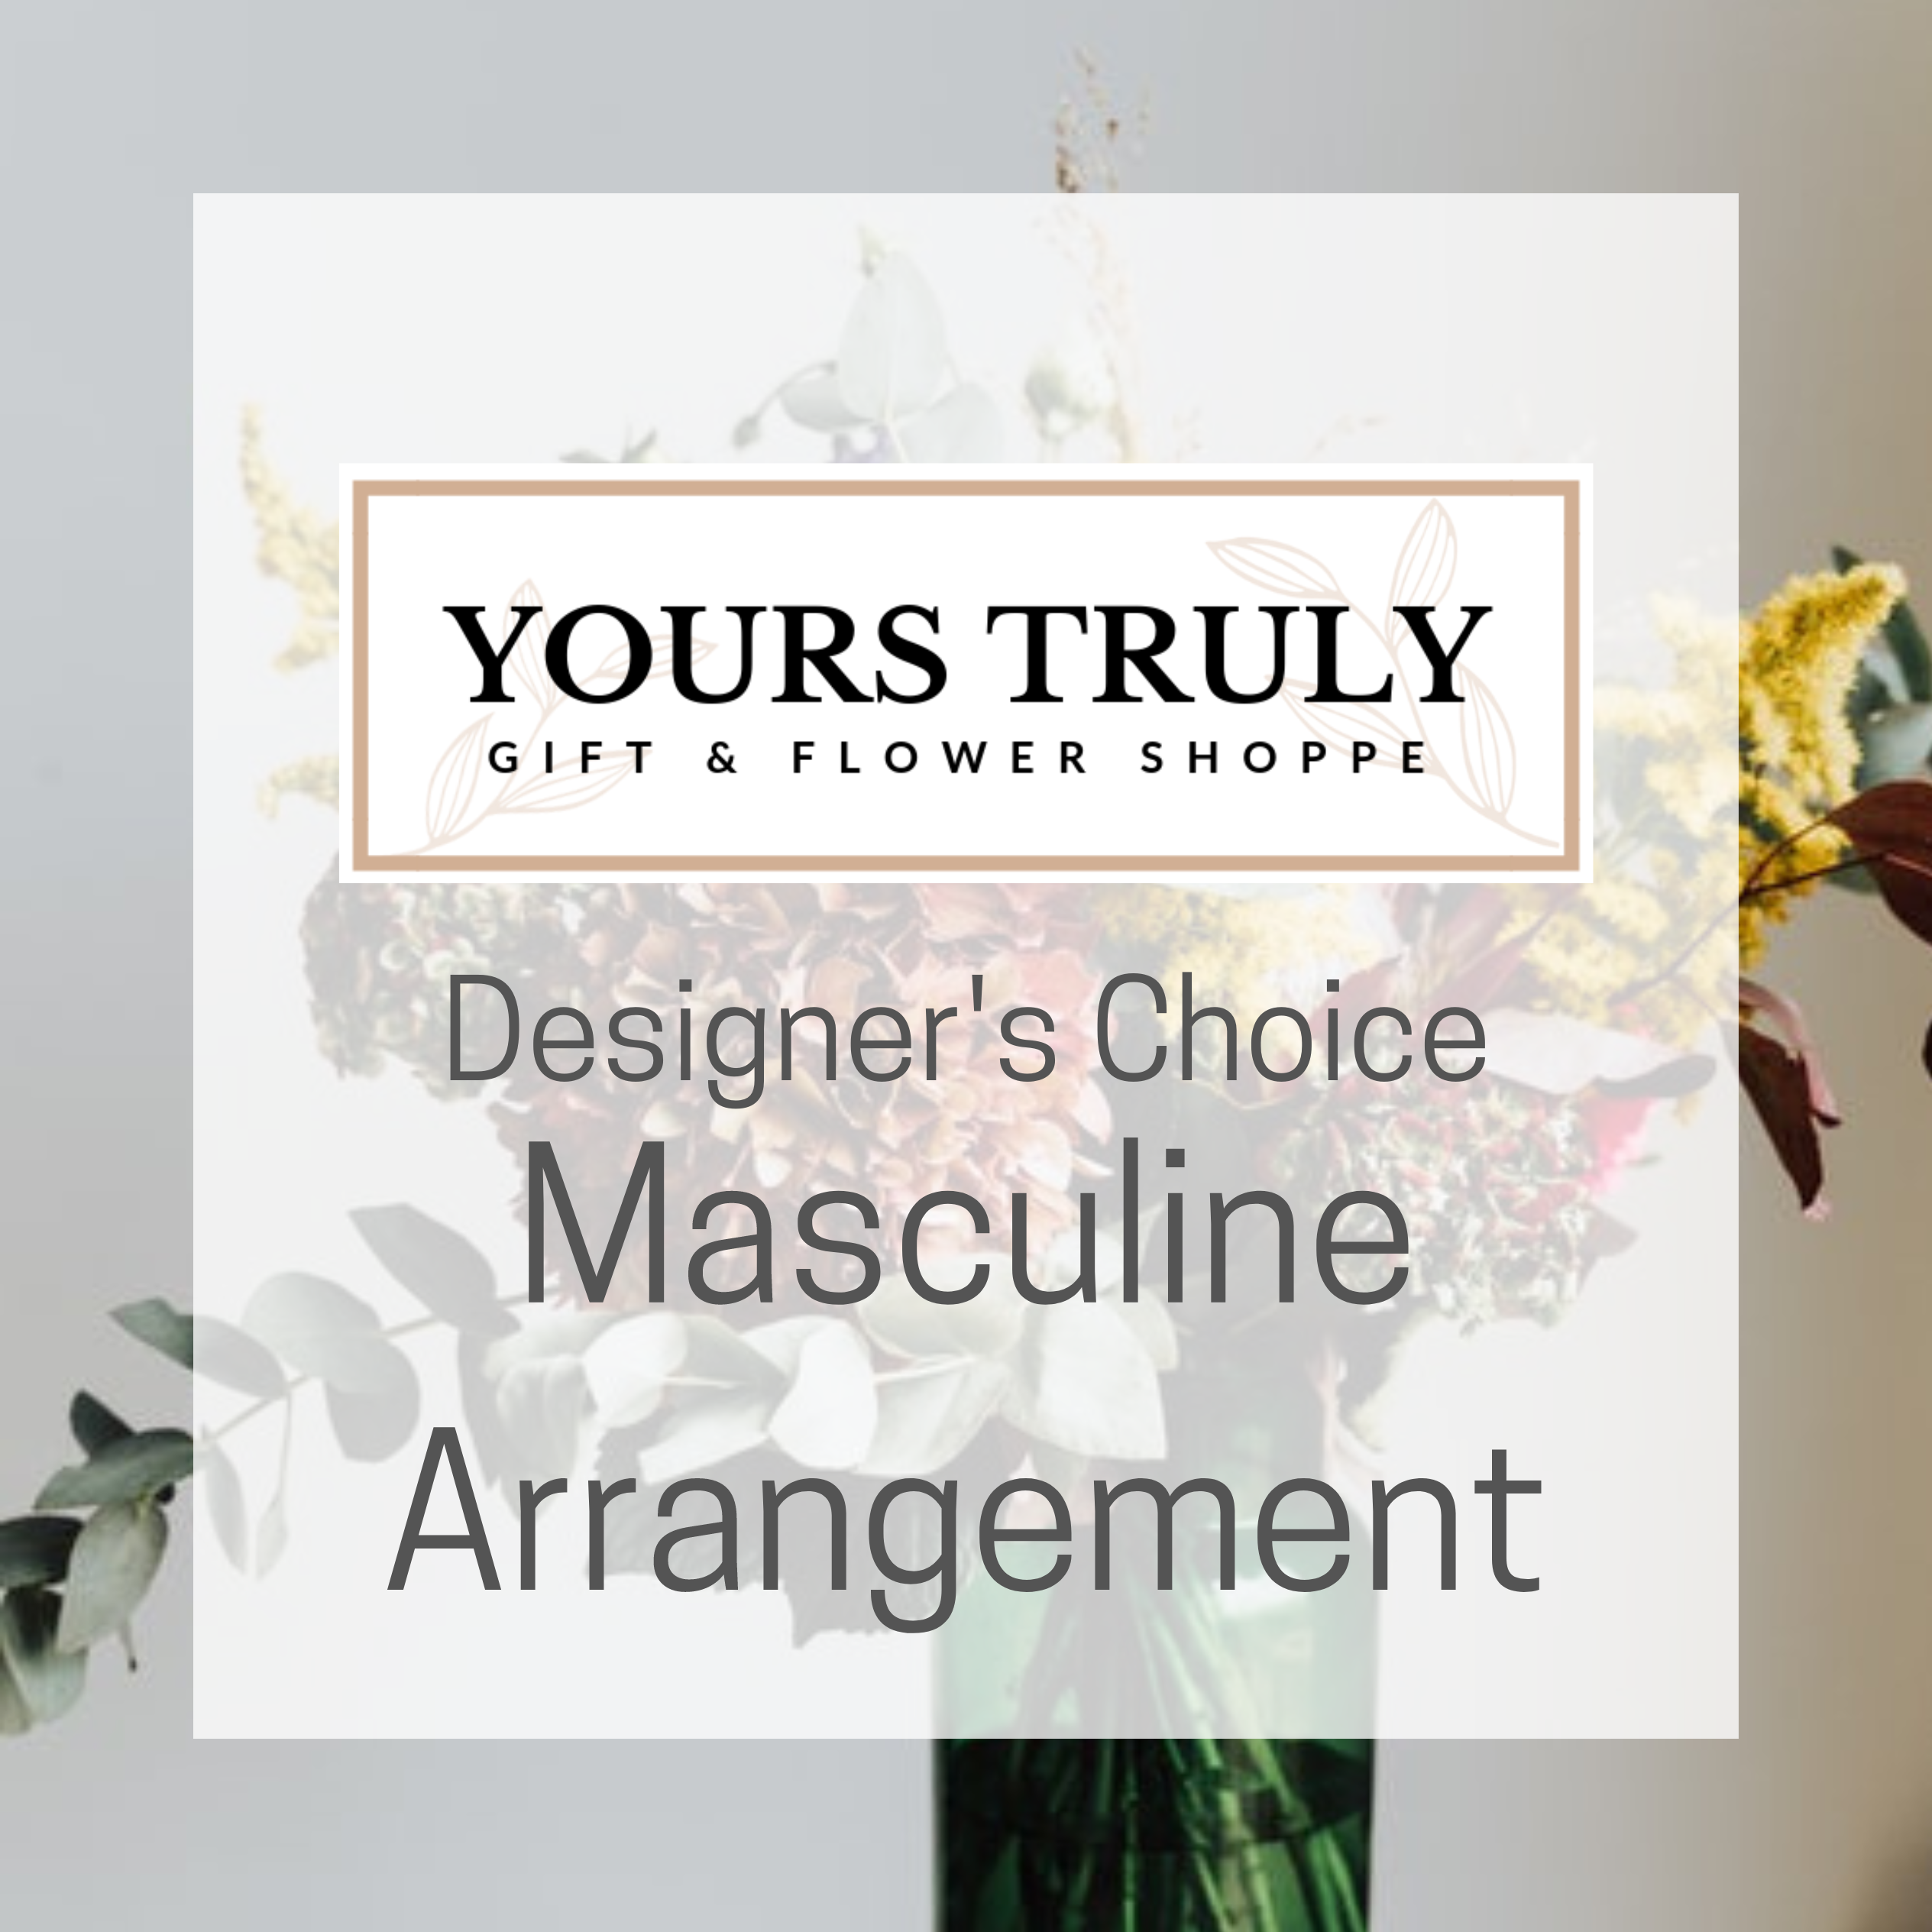 Designers Choice Masculine Arrangement